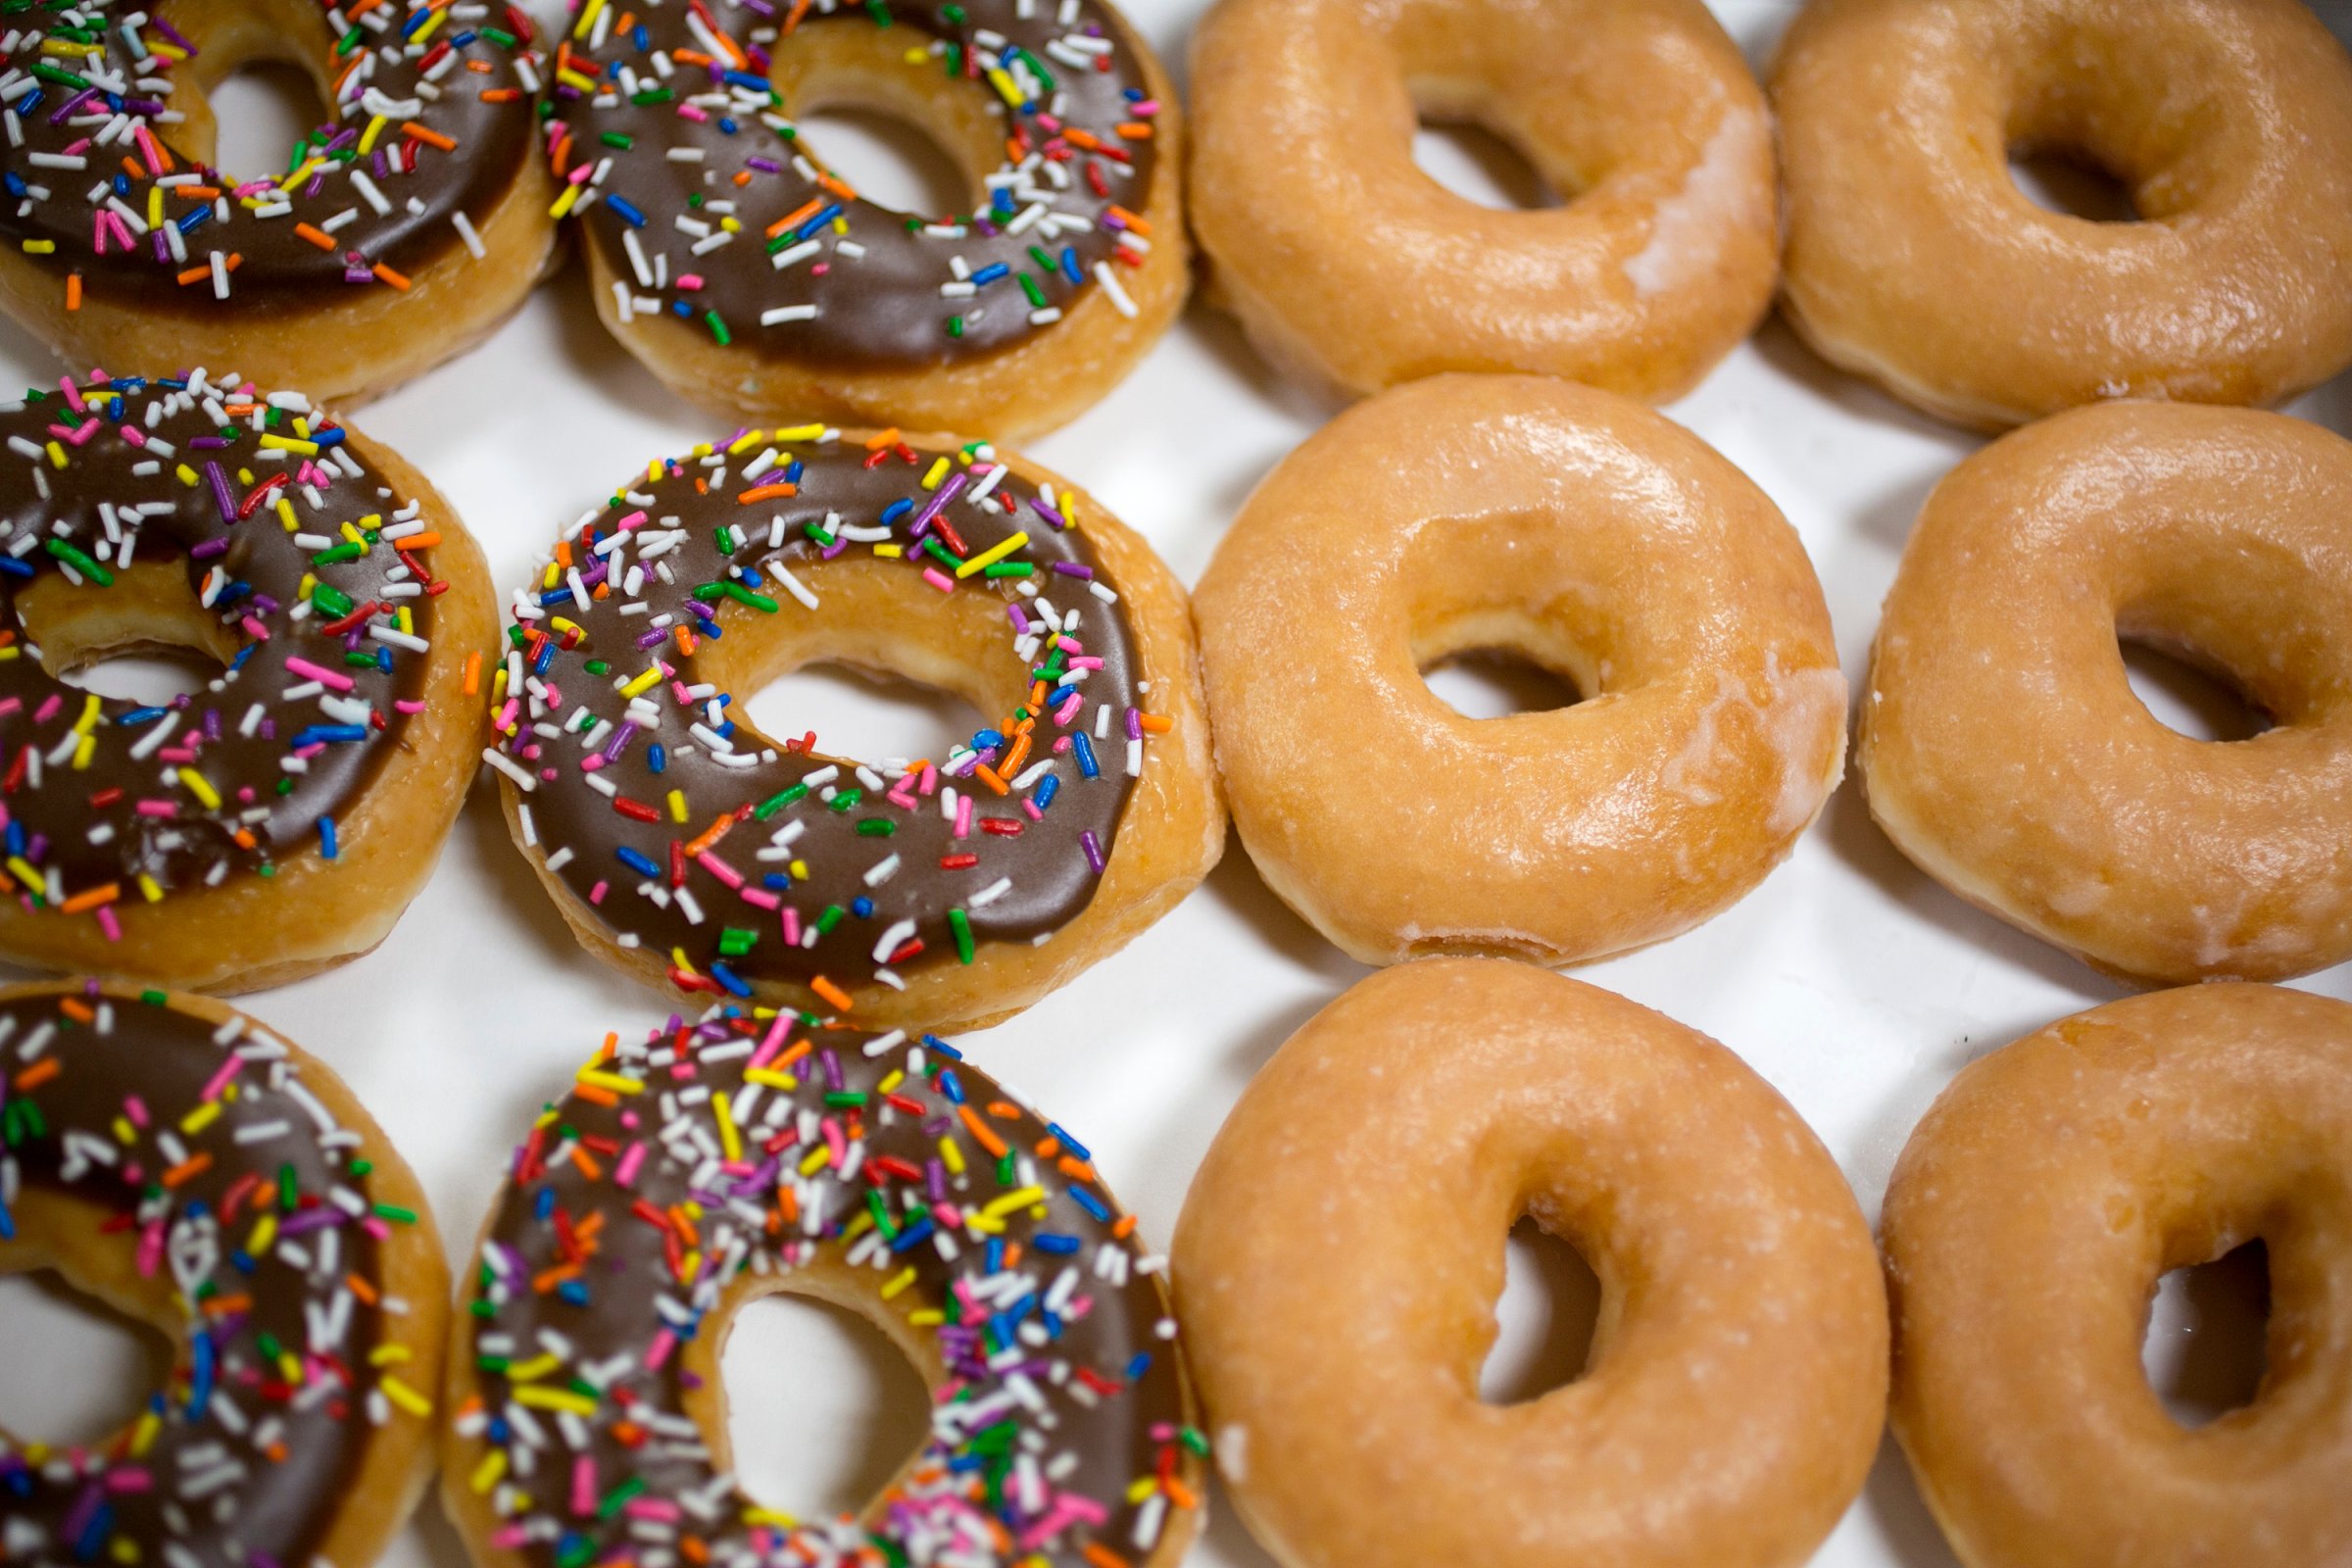 A box of Krispy Kreme Doughnuts Inc. doughnuts is arranged for a photograph in Washington, D.C.